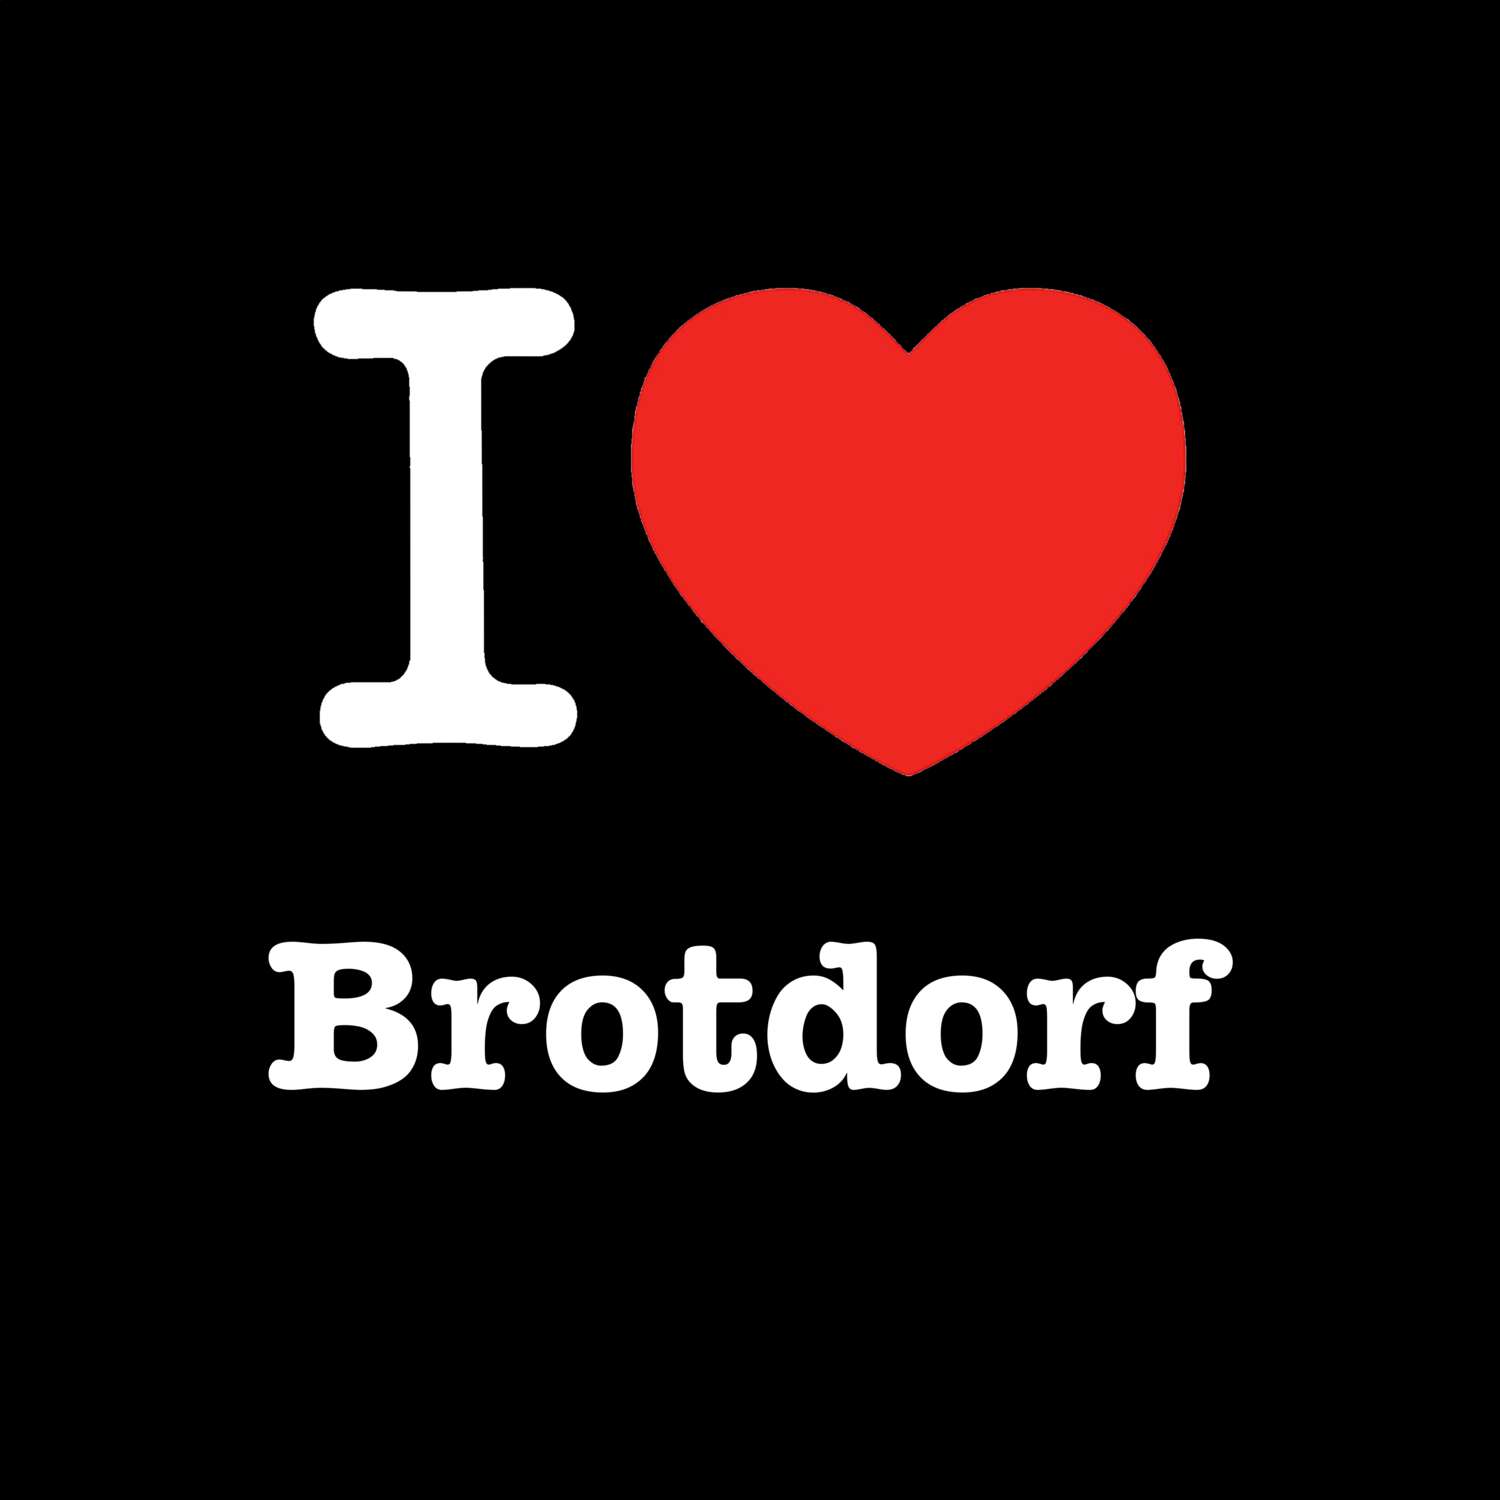 Brotdorf T-Shirt »I love«